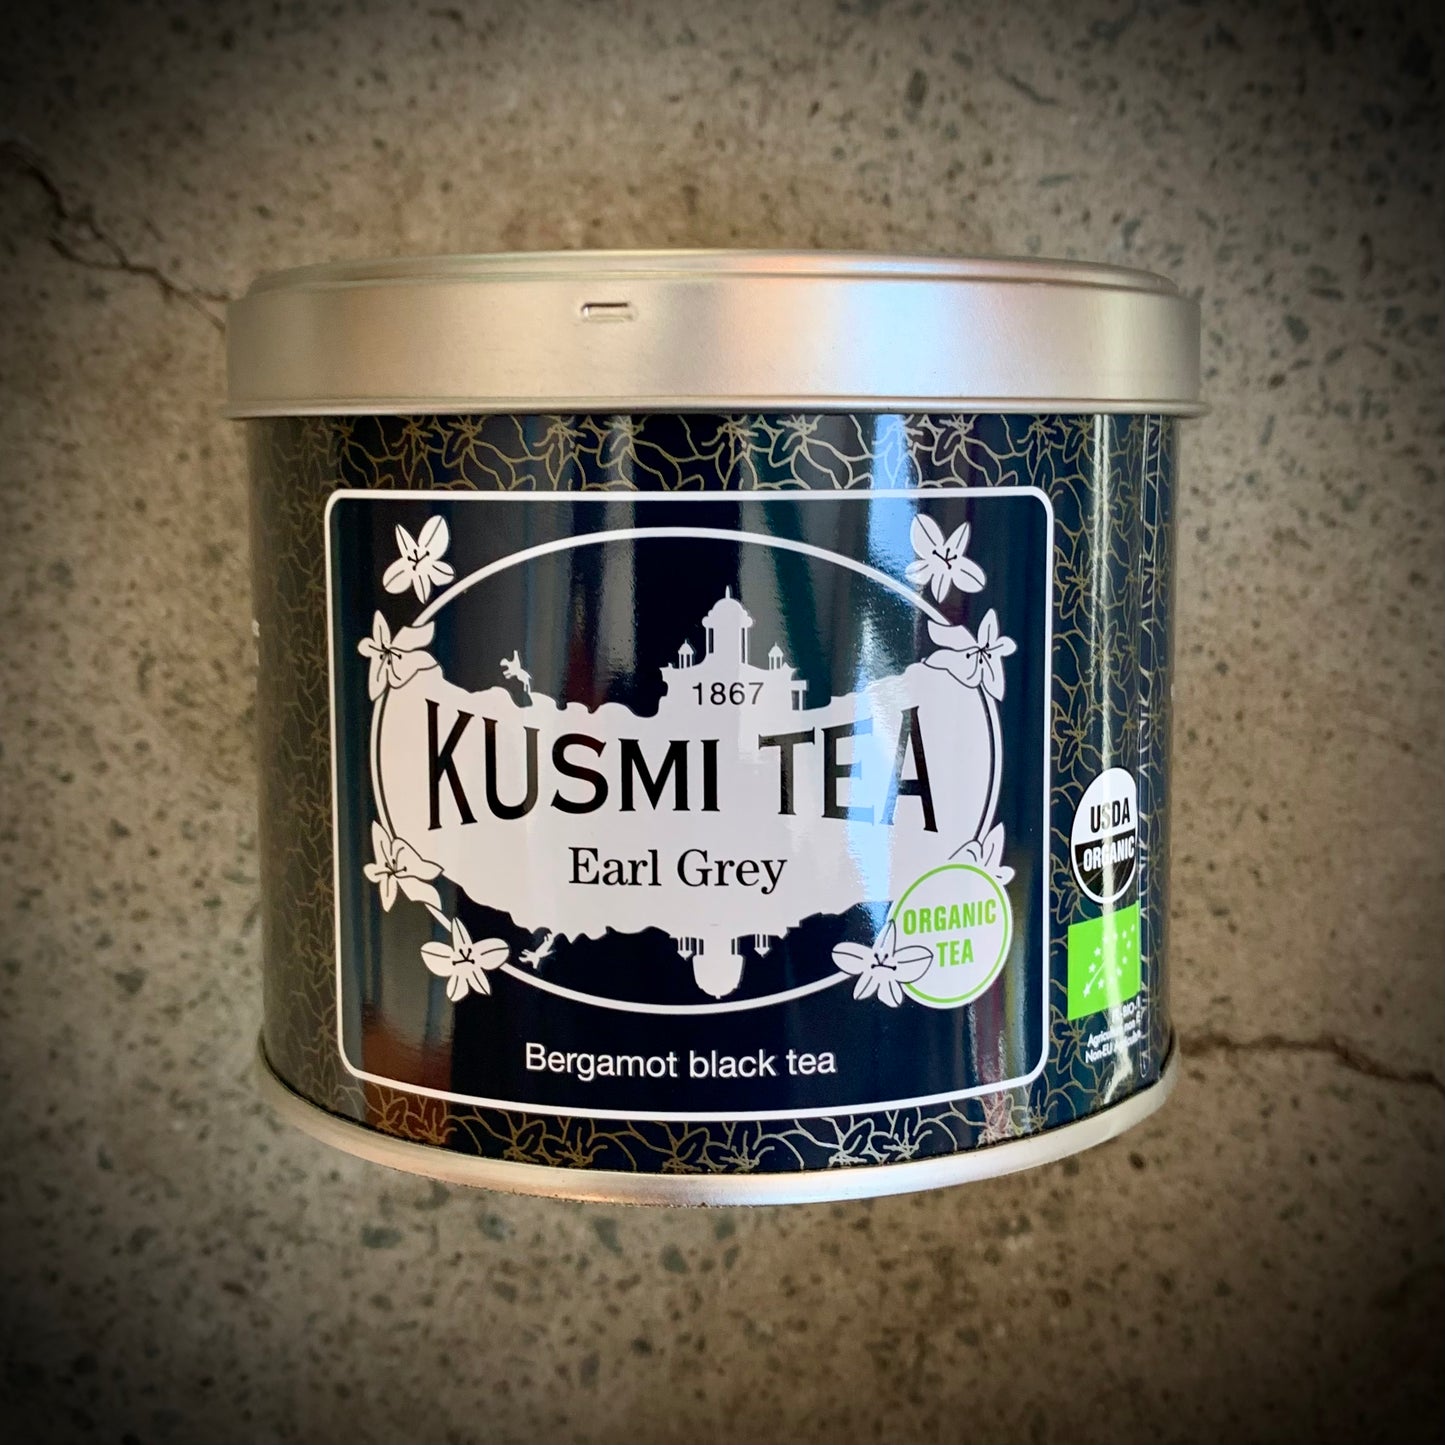 Kusmi, Earl Grey, Organic tea - 100g tin